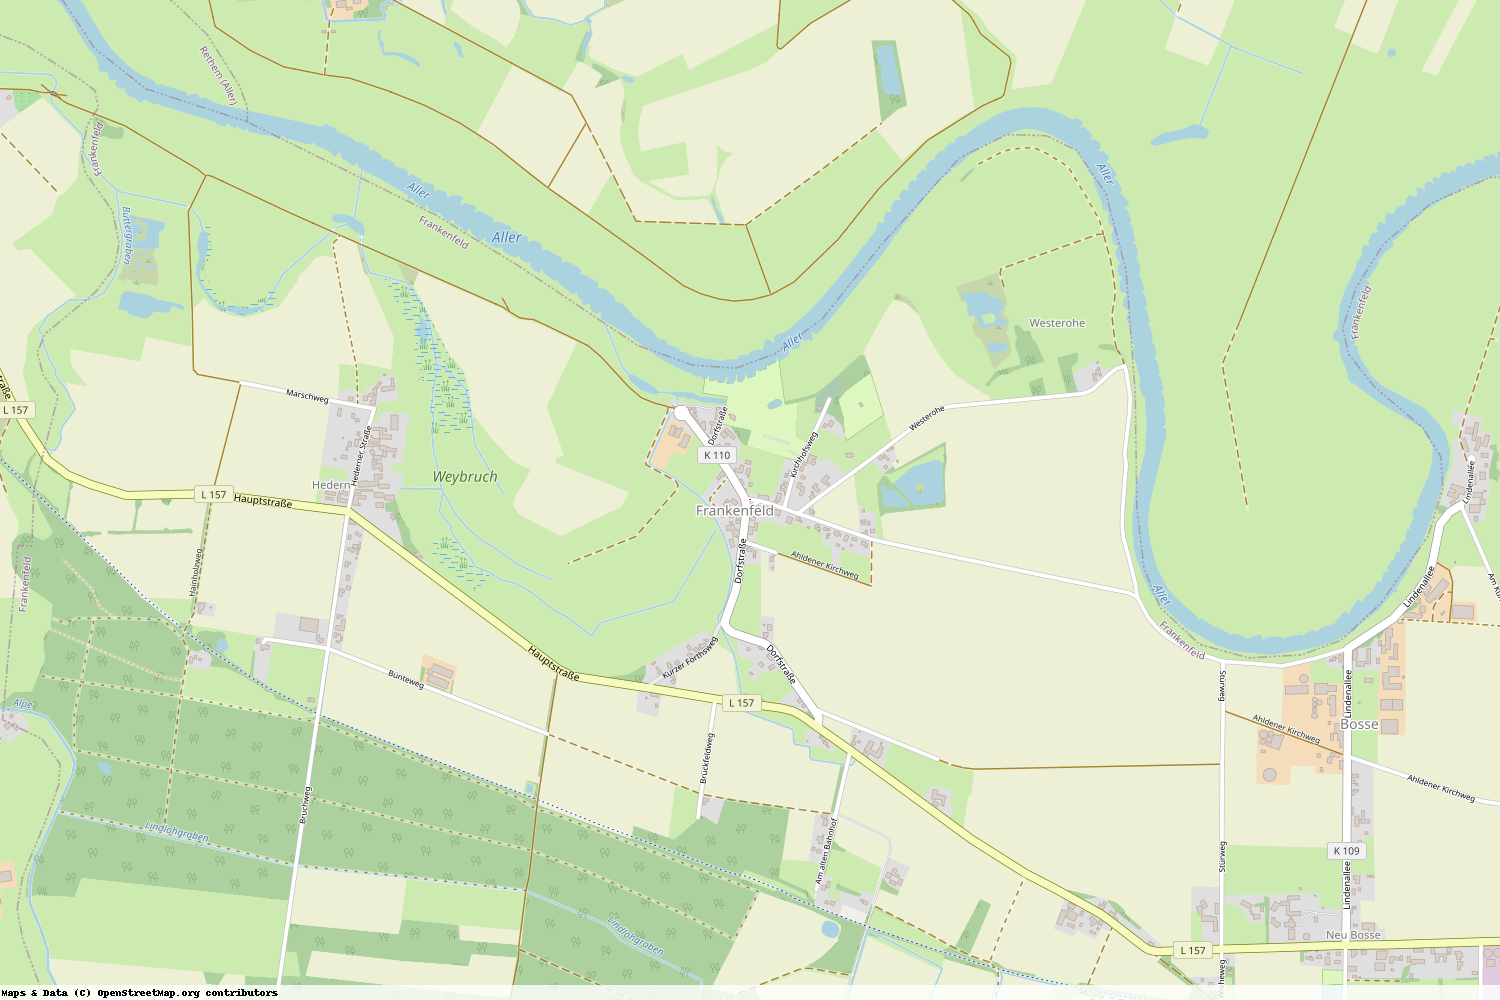 Ist gerade Stromausfall in Niedersachsen - Heidekreis - Frankenfeld?